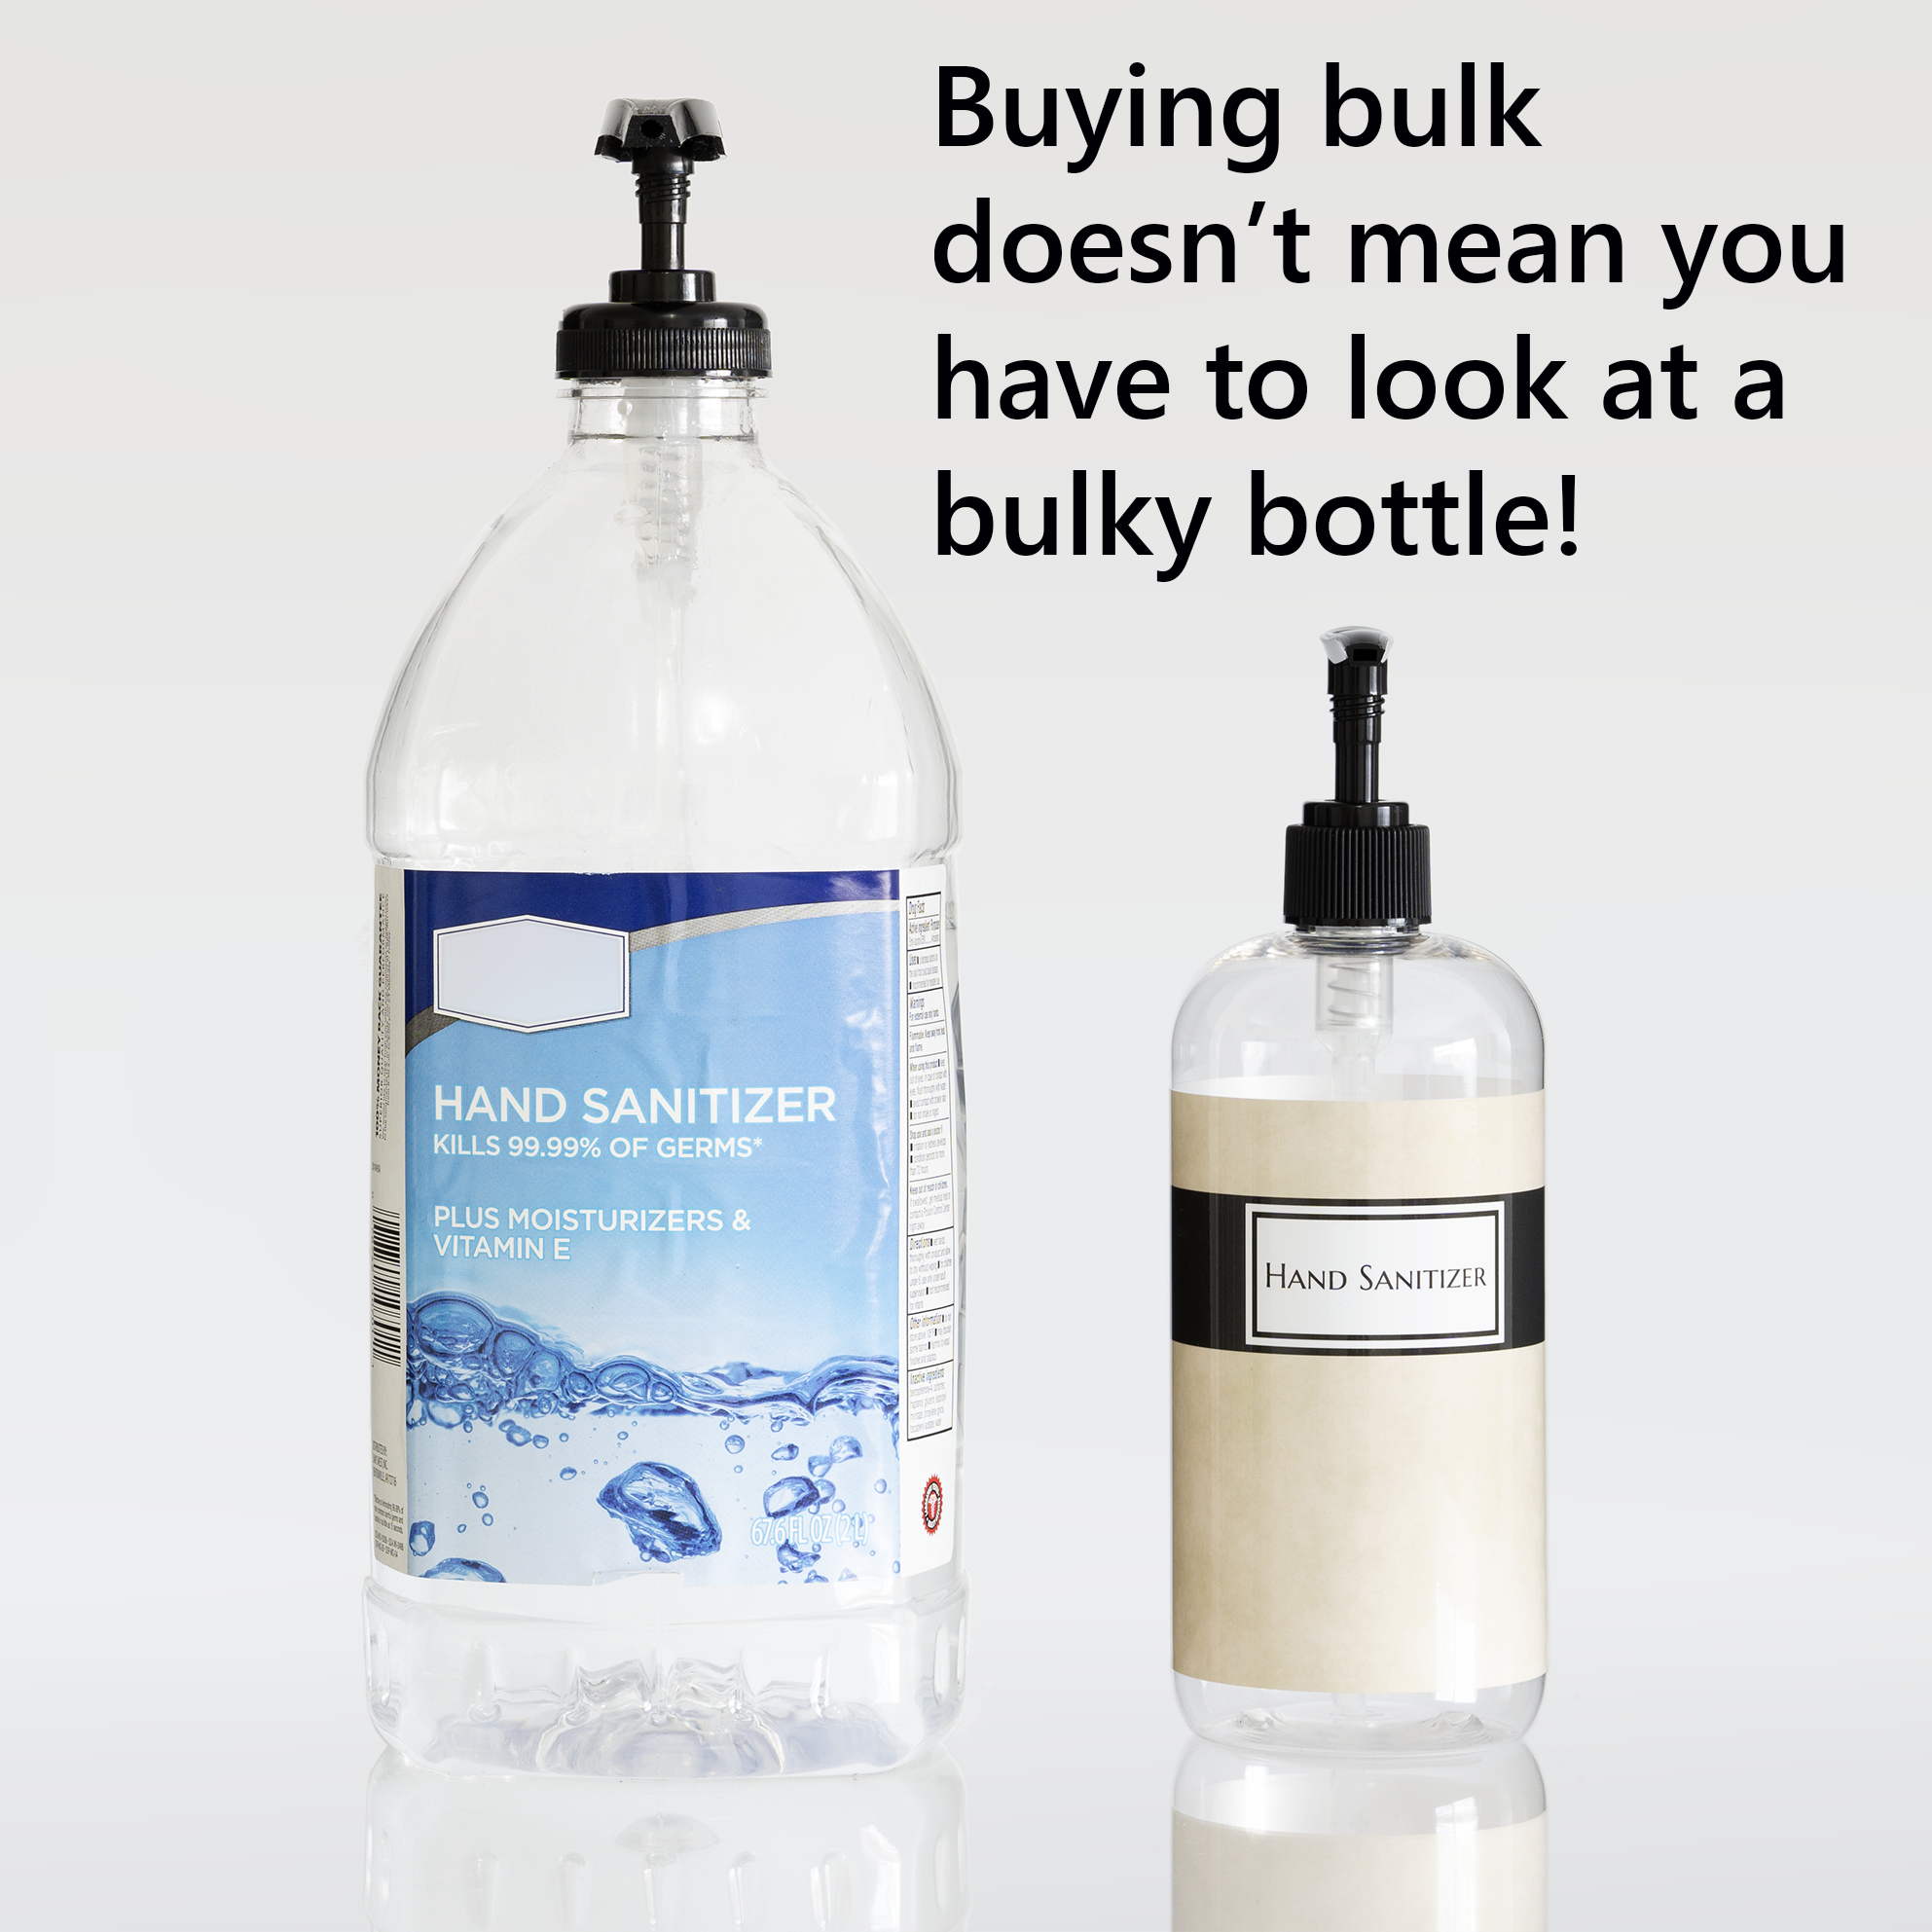 Refillable 16oz Hand Sanitizer Pump Bottle, Clear PET Plastic with Label (Empty, no sanitizer product inside)